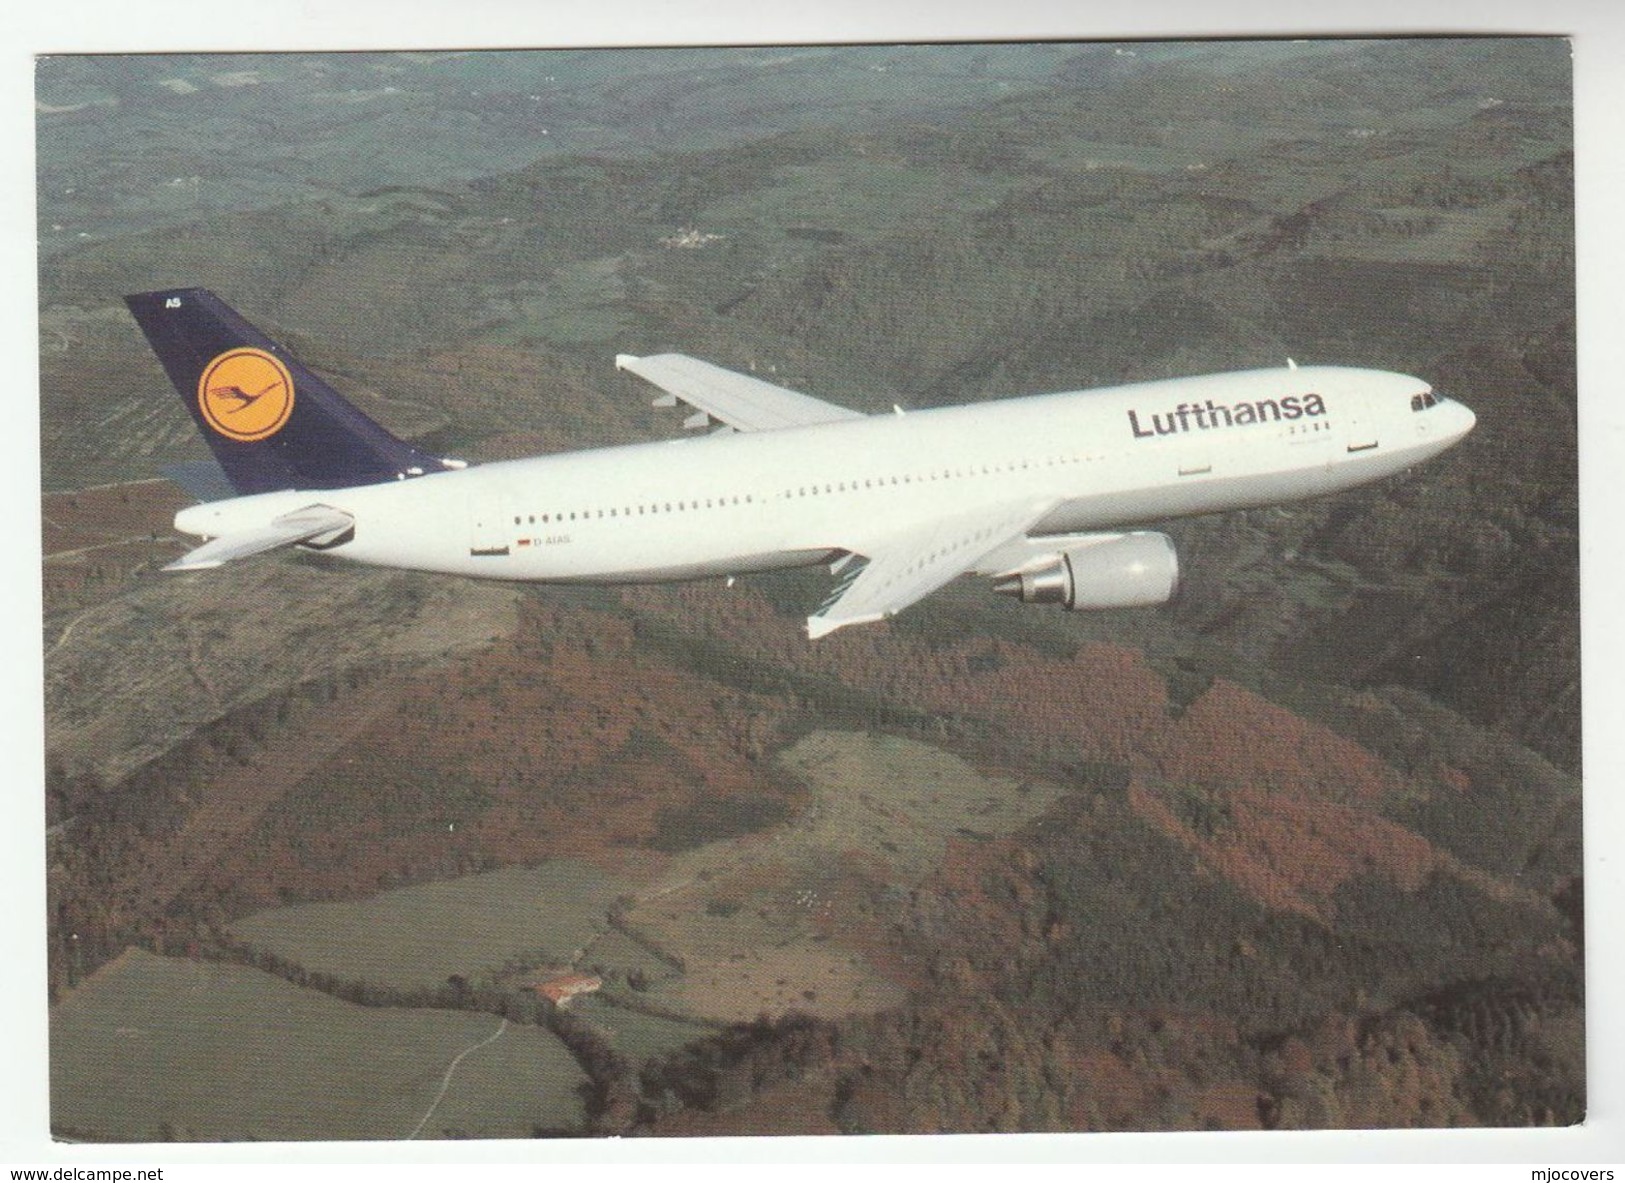 LUFTHANSA AIRBUS A300 600 Aircraft Postcard Germany Aviation, Flight - 1946-....: Modern Era